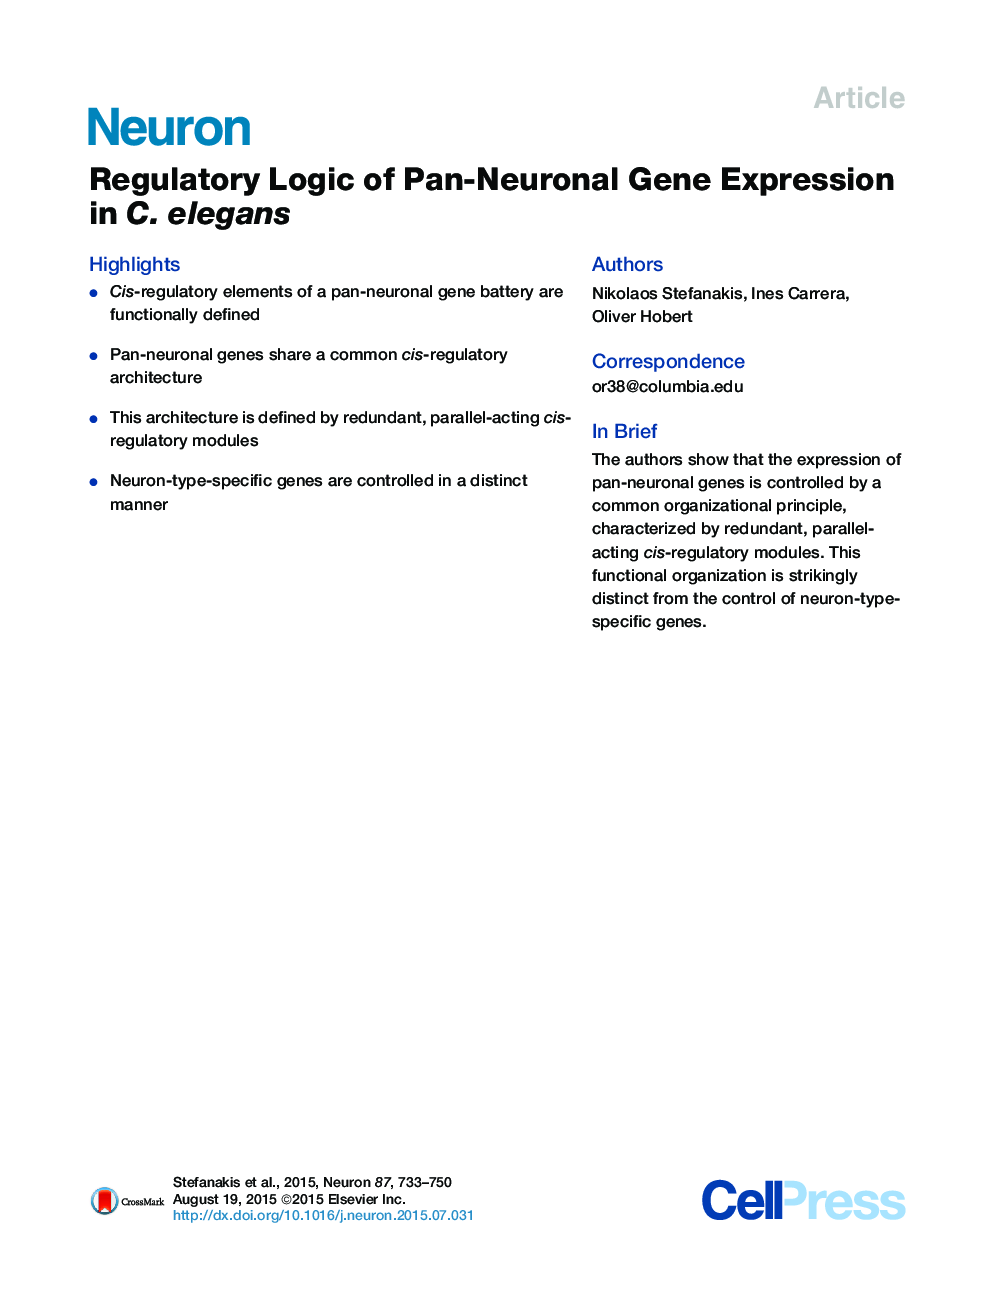 Regulatory Logic of Pan-Neuronal Gene Expression in C. elegans